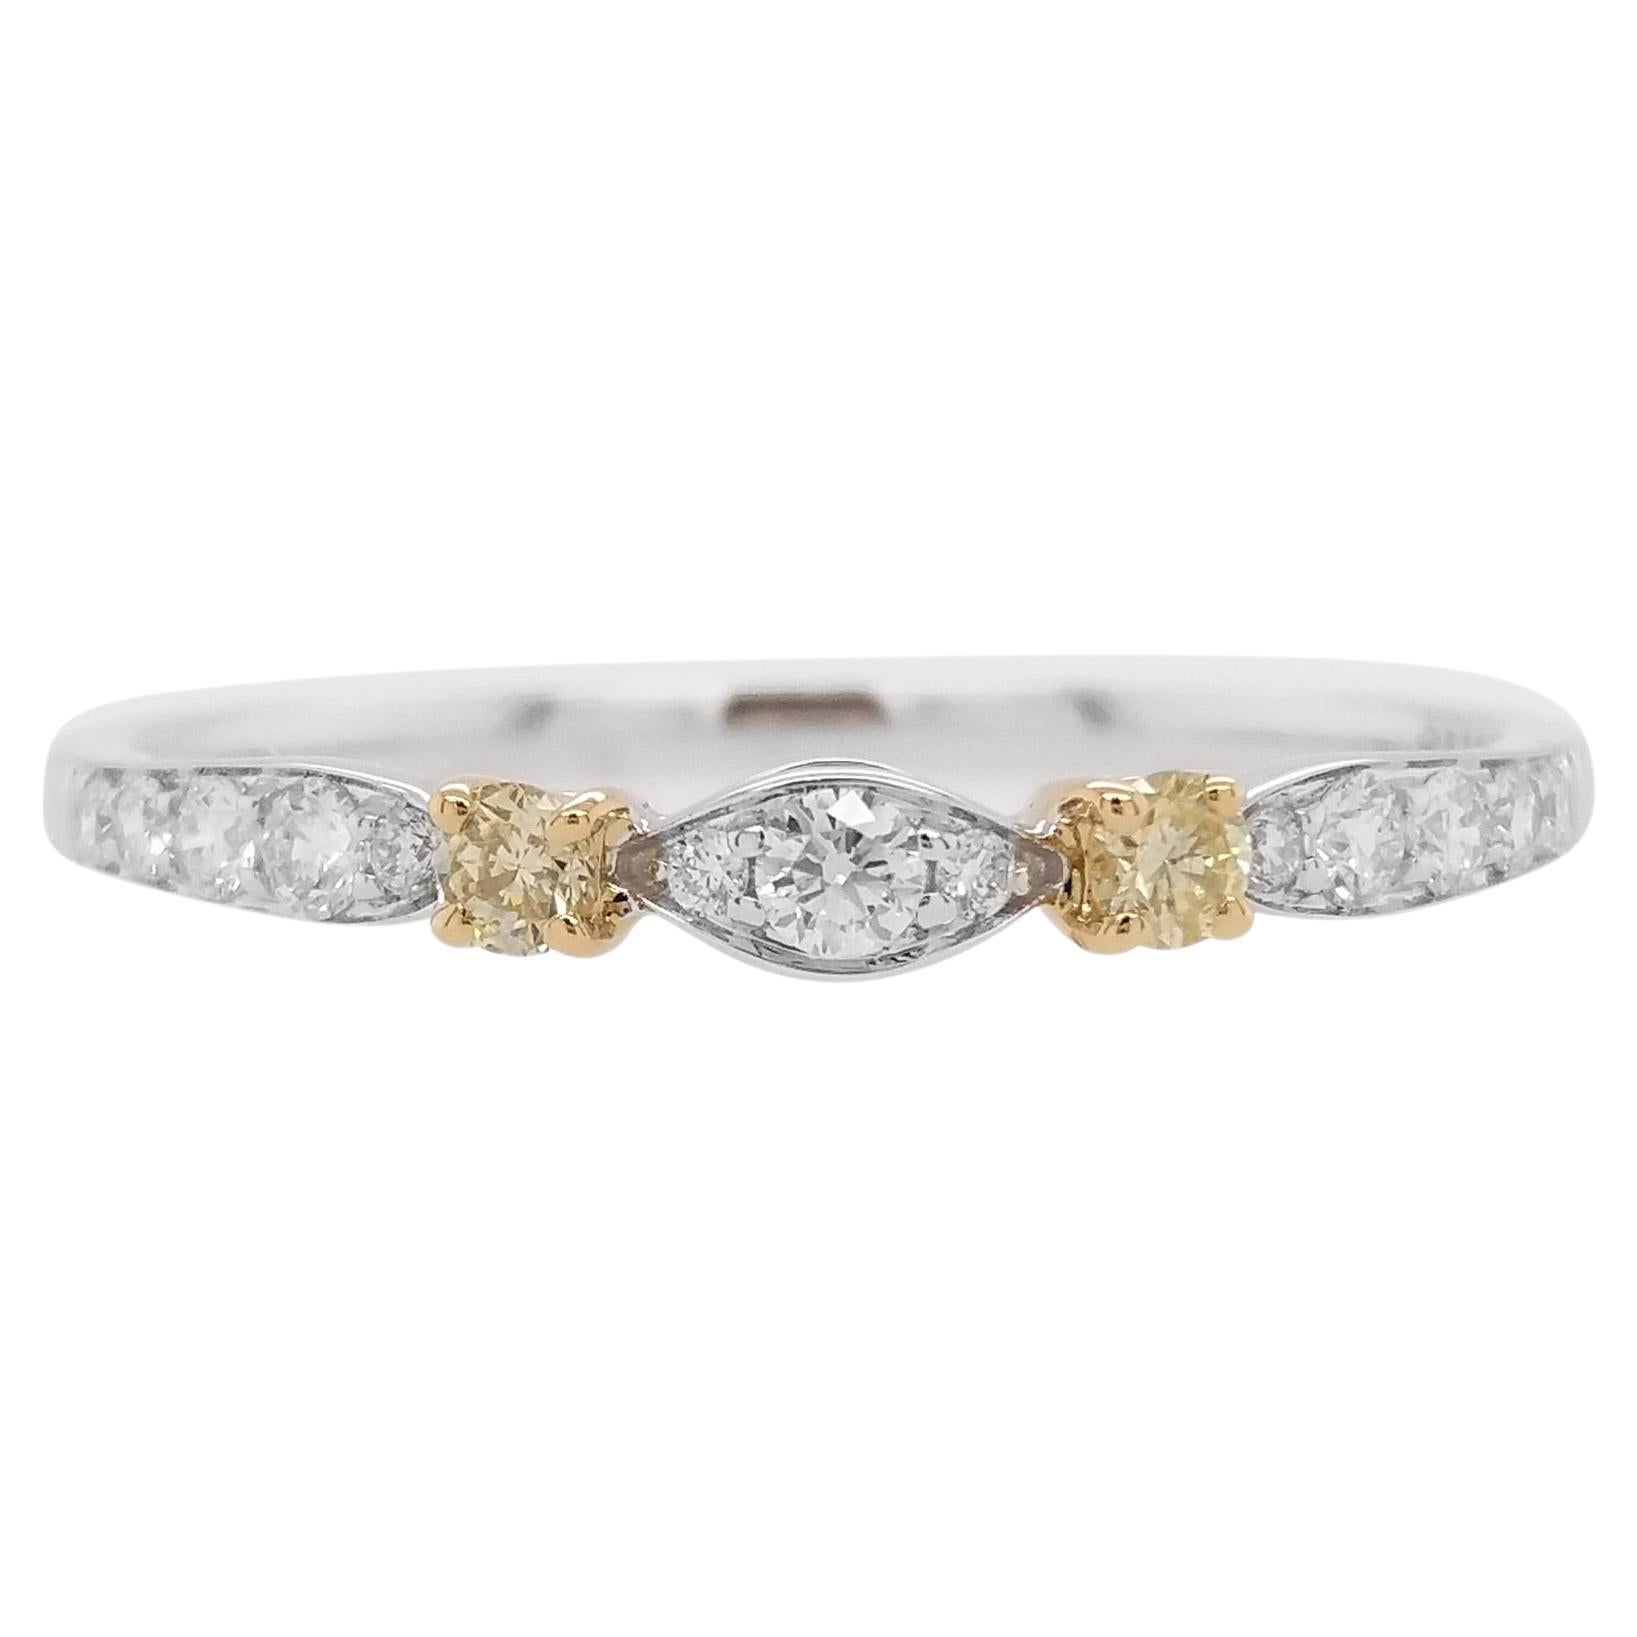 Rare Brilliant-Cut Yellow Diamond and White diamond Band Ring made in 18K Gold